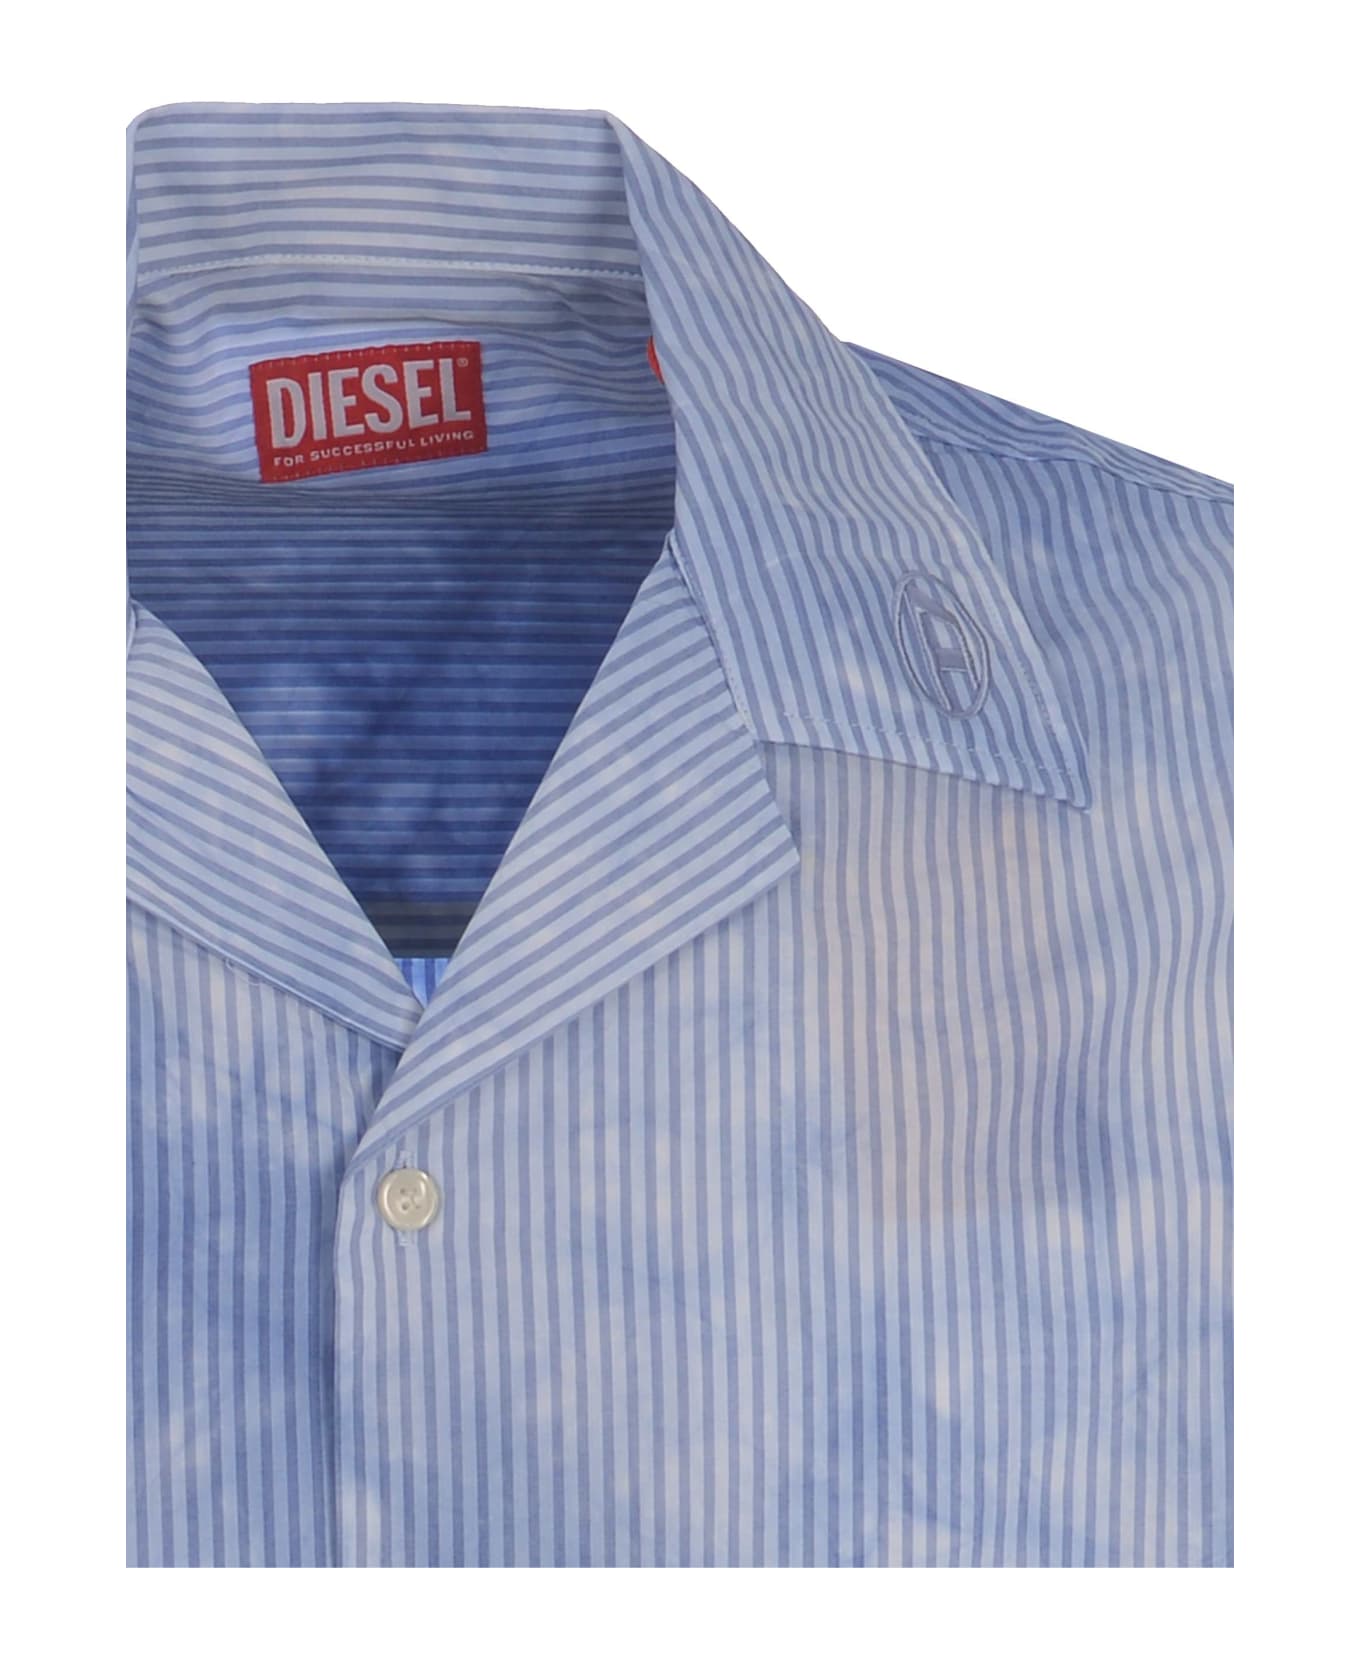 Diesel Bowling Shirt Diesel "trucker" Made Of Poplin - Celeste